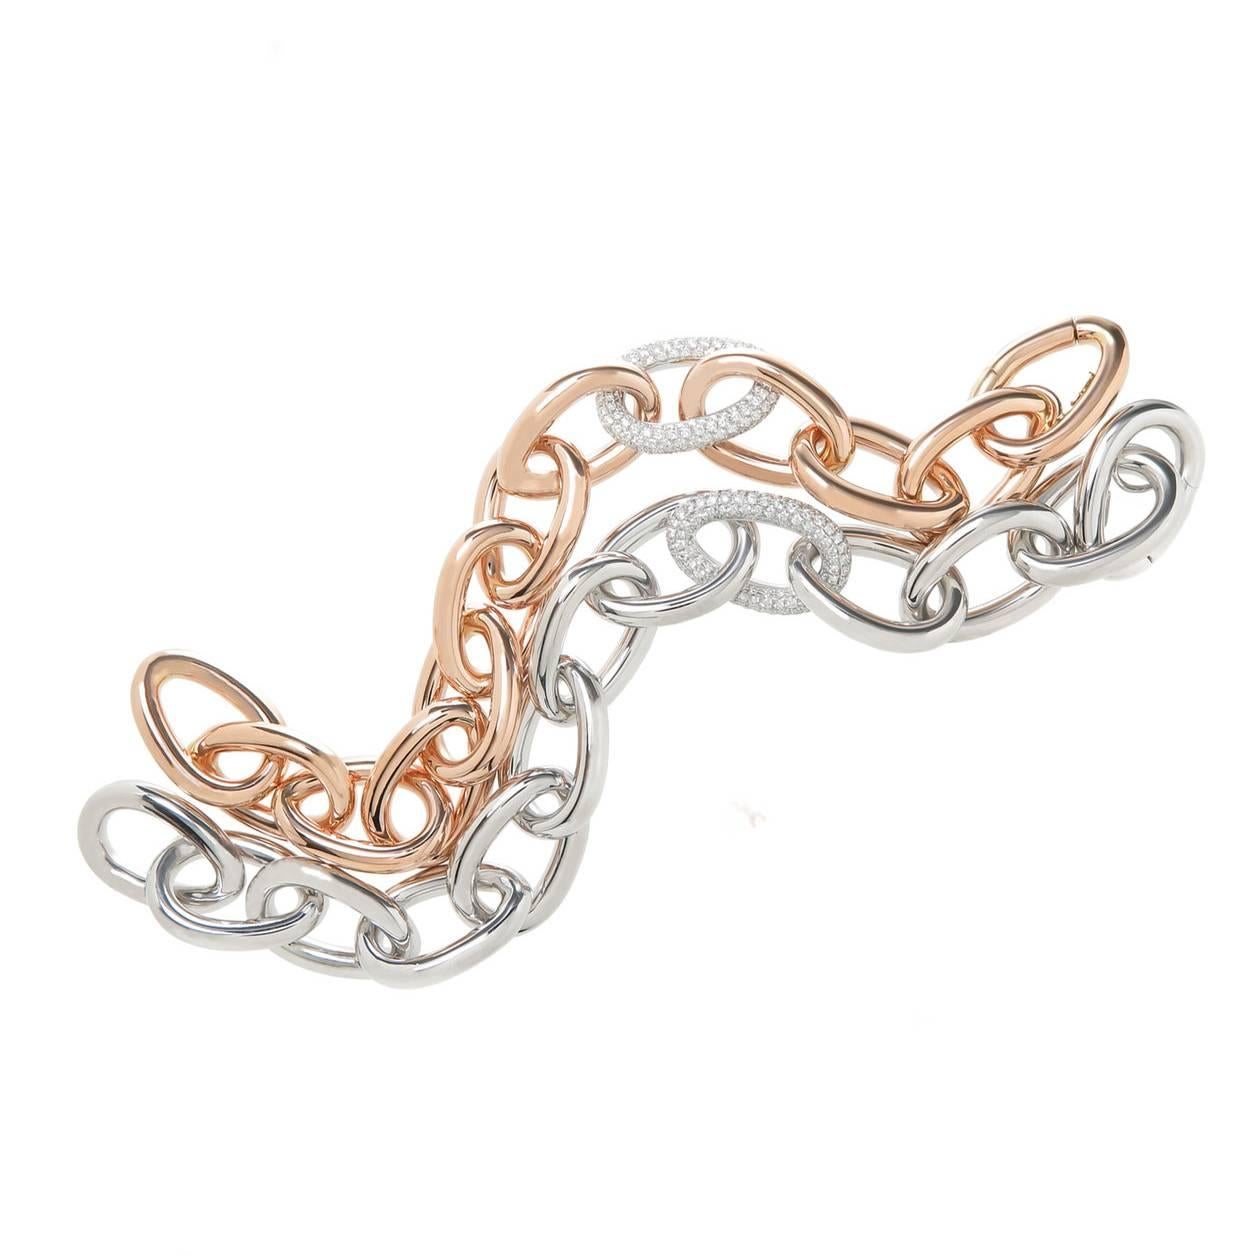 18 Karat White Gold Link Bracelet with One Diamond Center Link For Sale